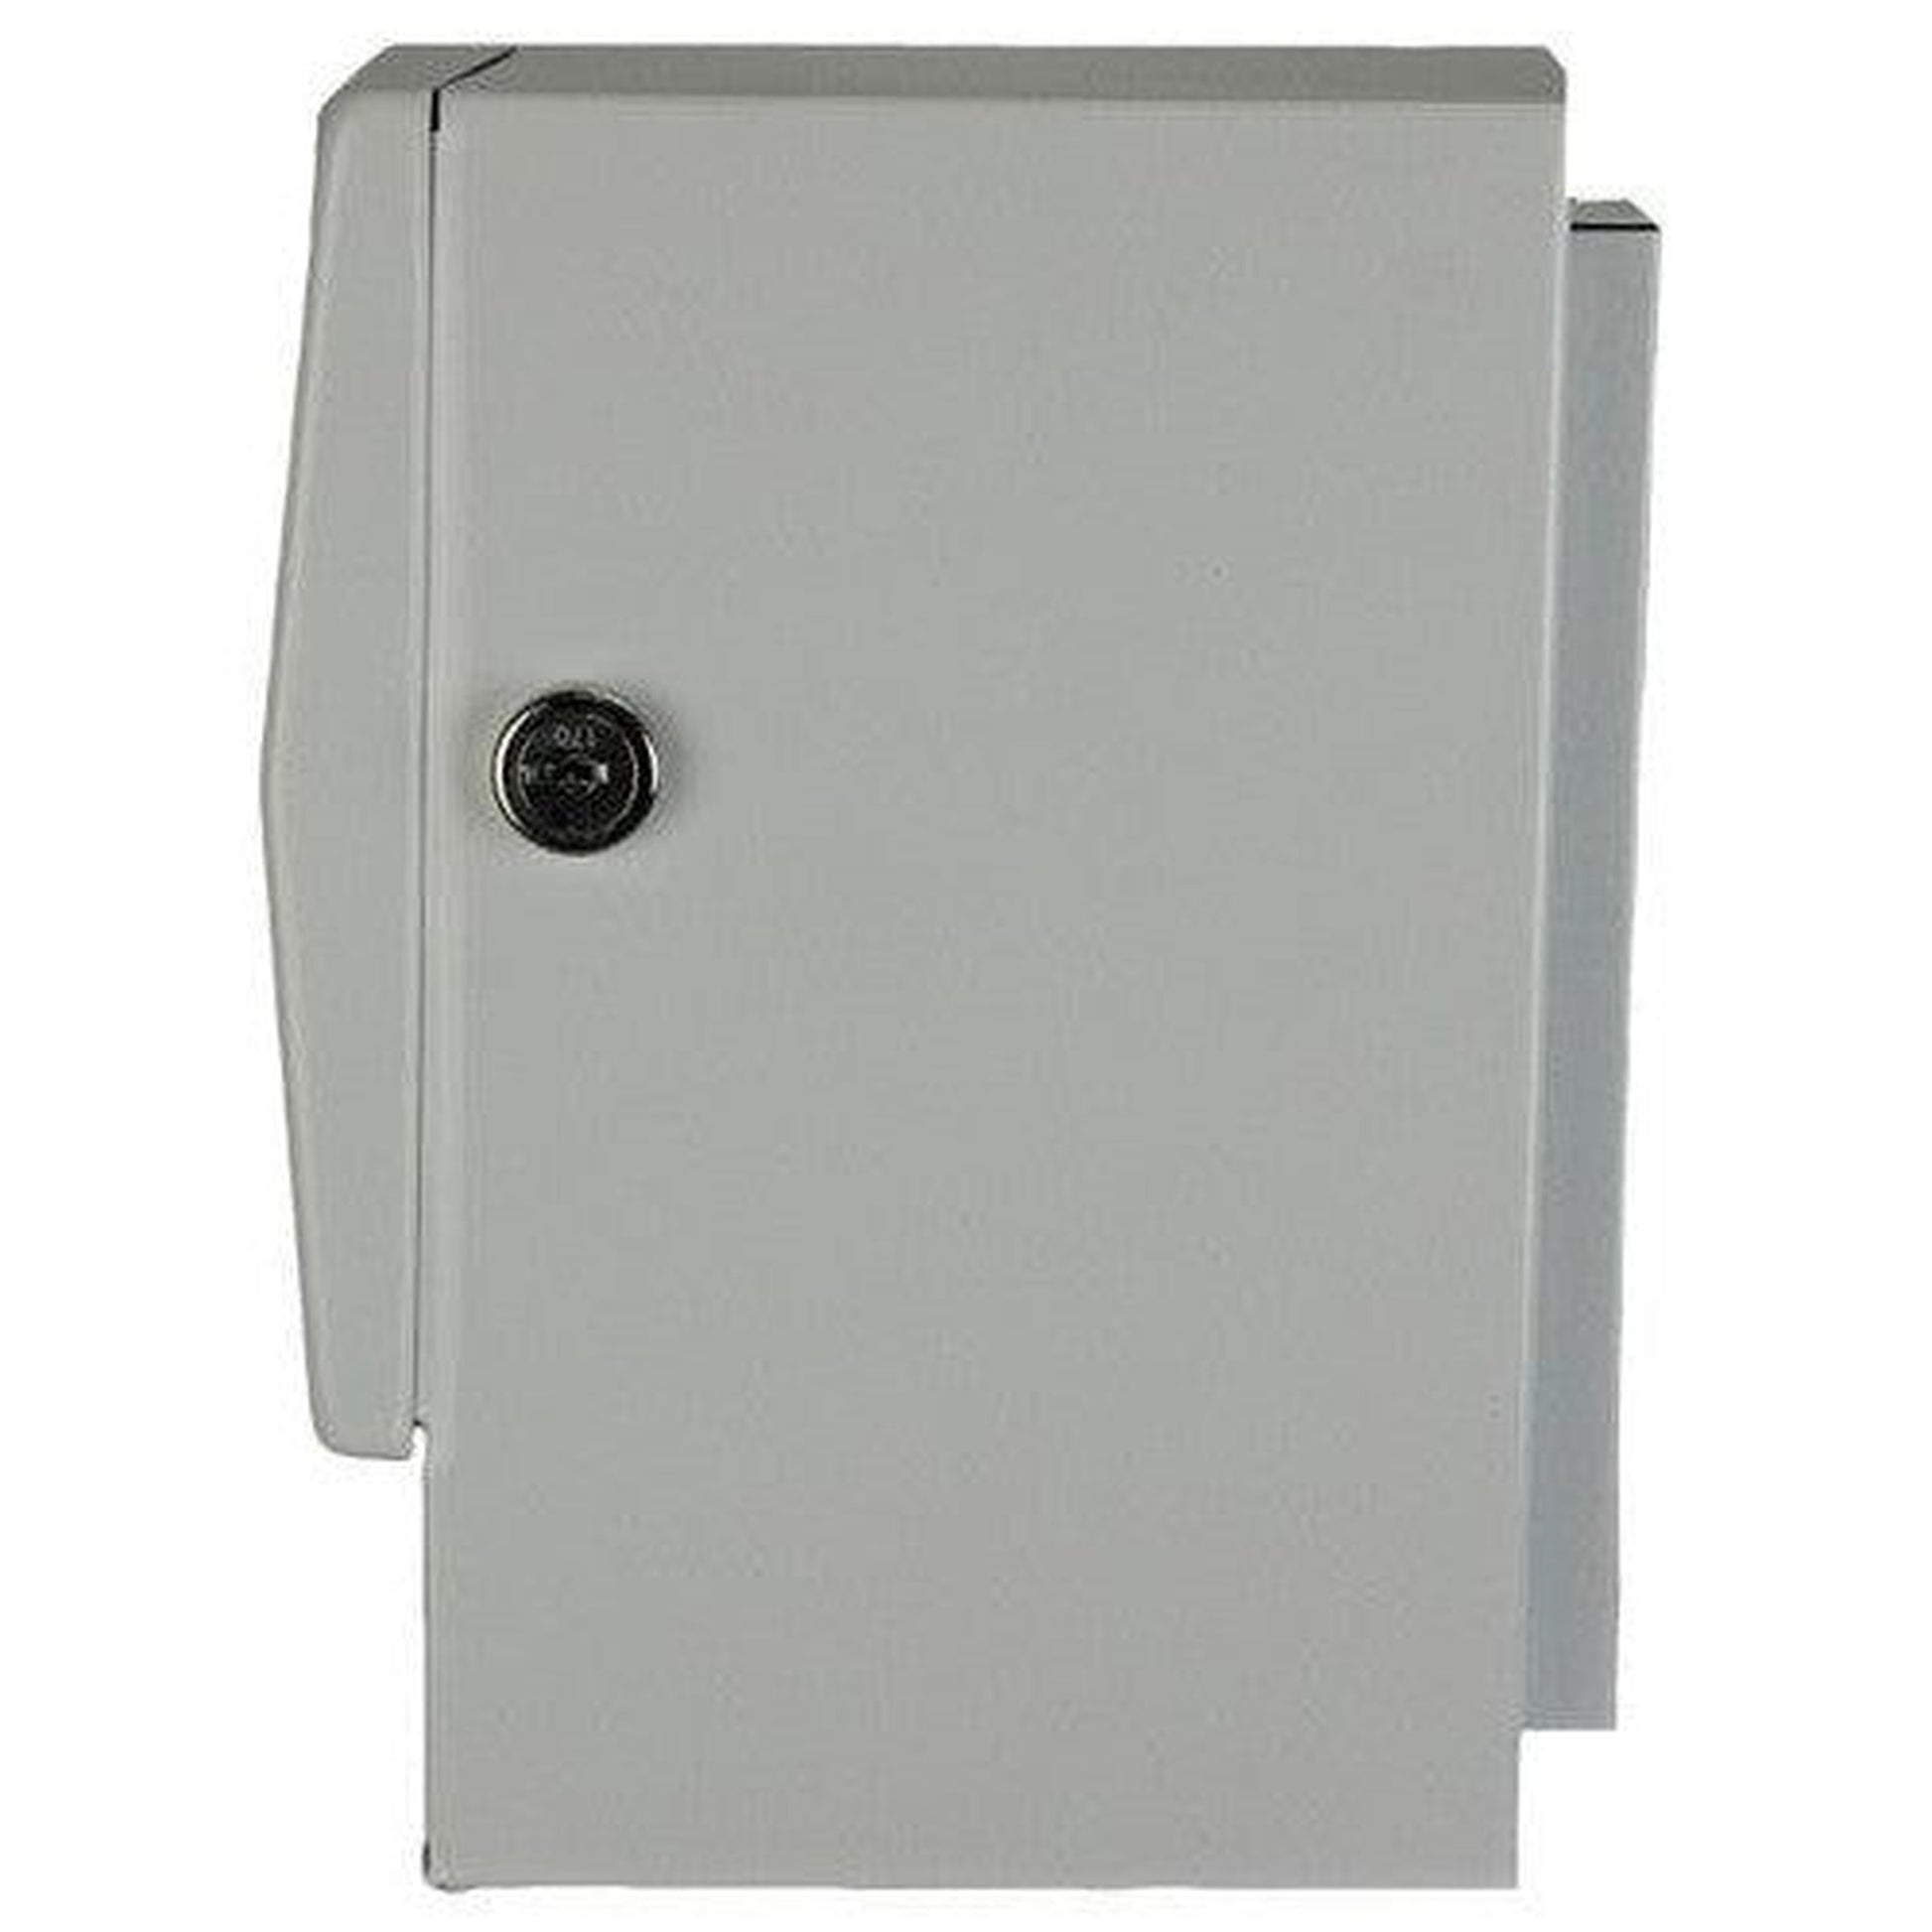 Frost 10.5 x 7.25 x 9.5 White Epoxy Powder Paper Product Dispenser